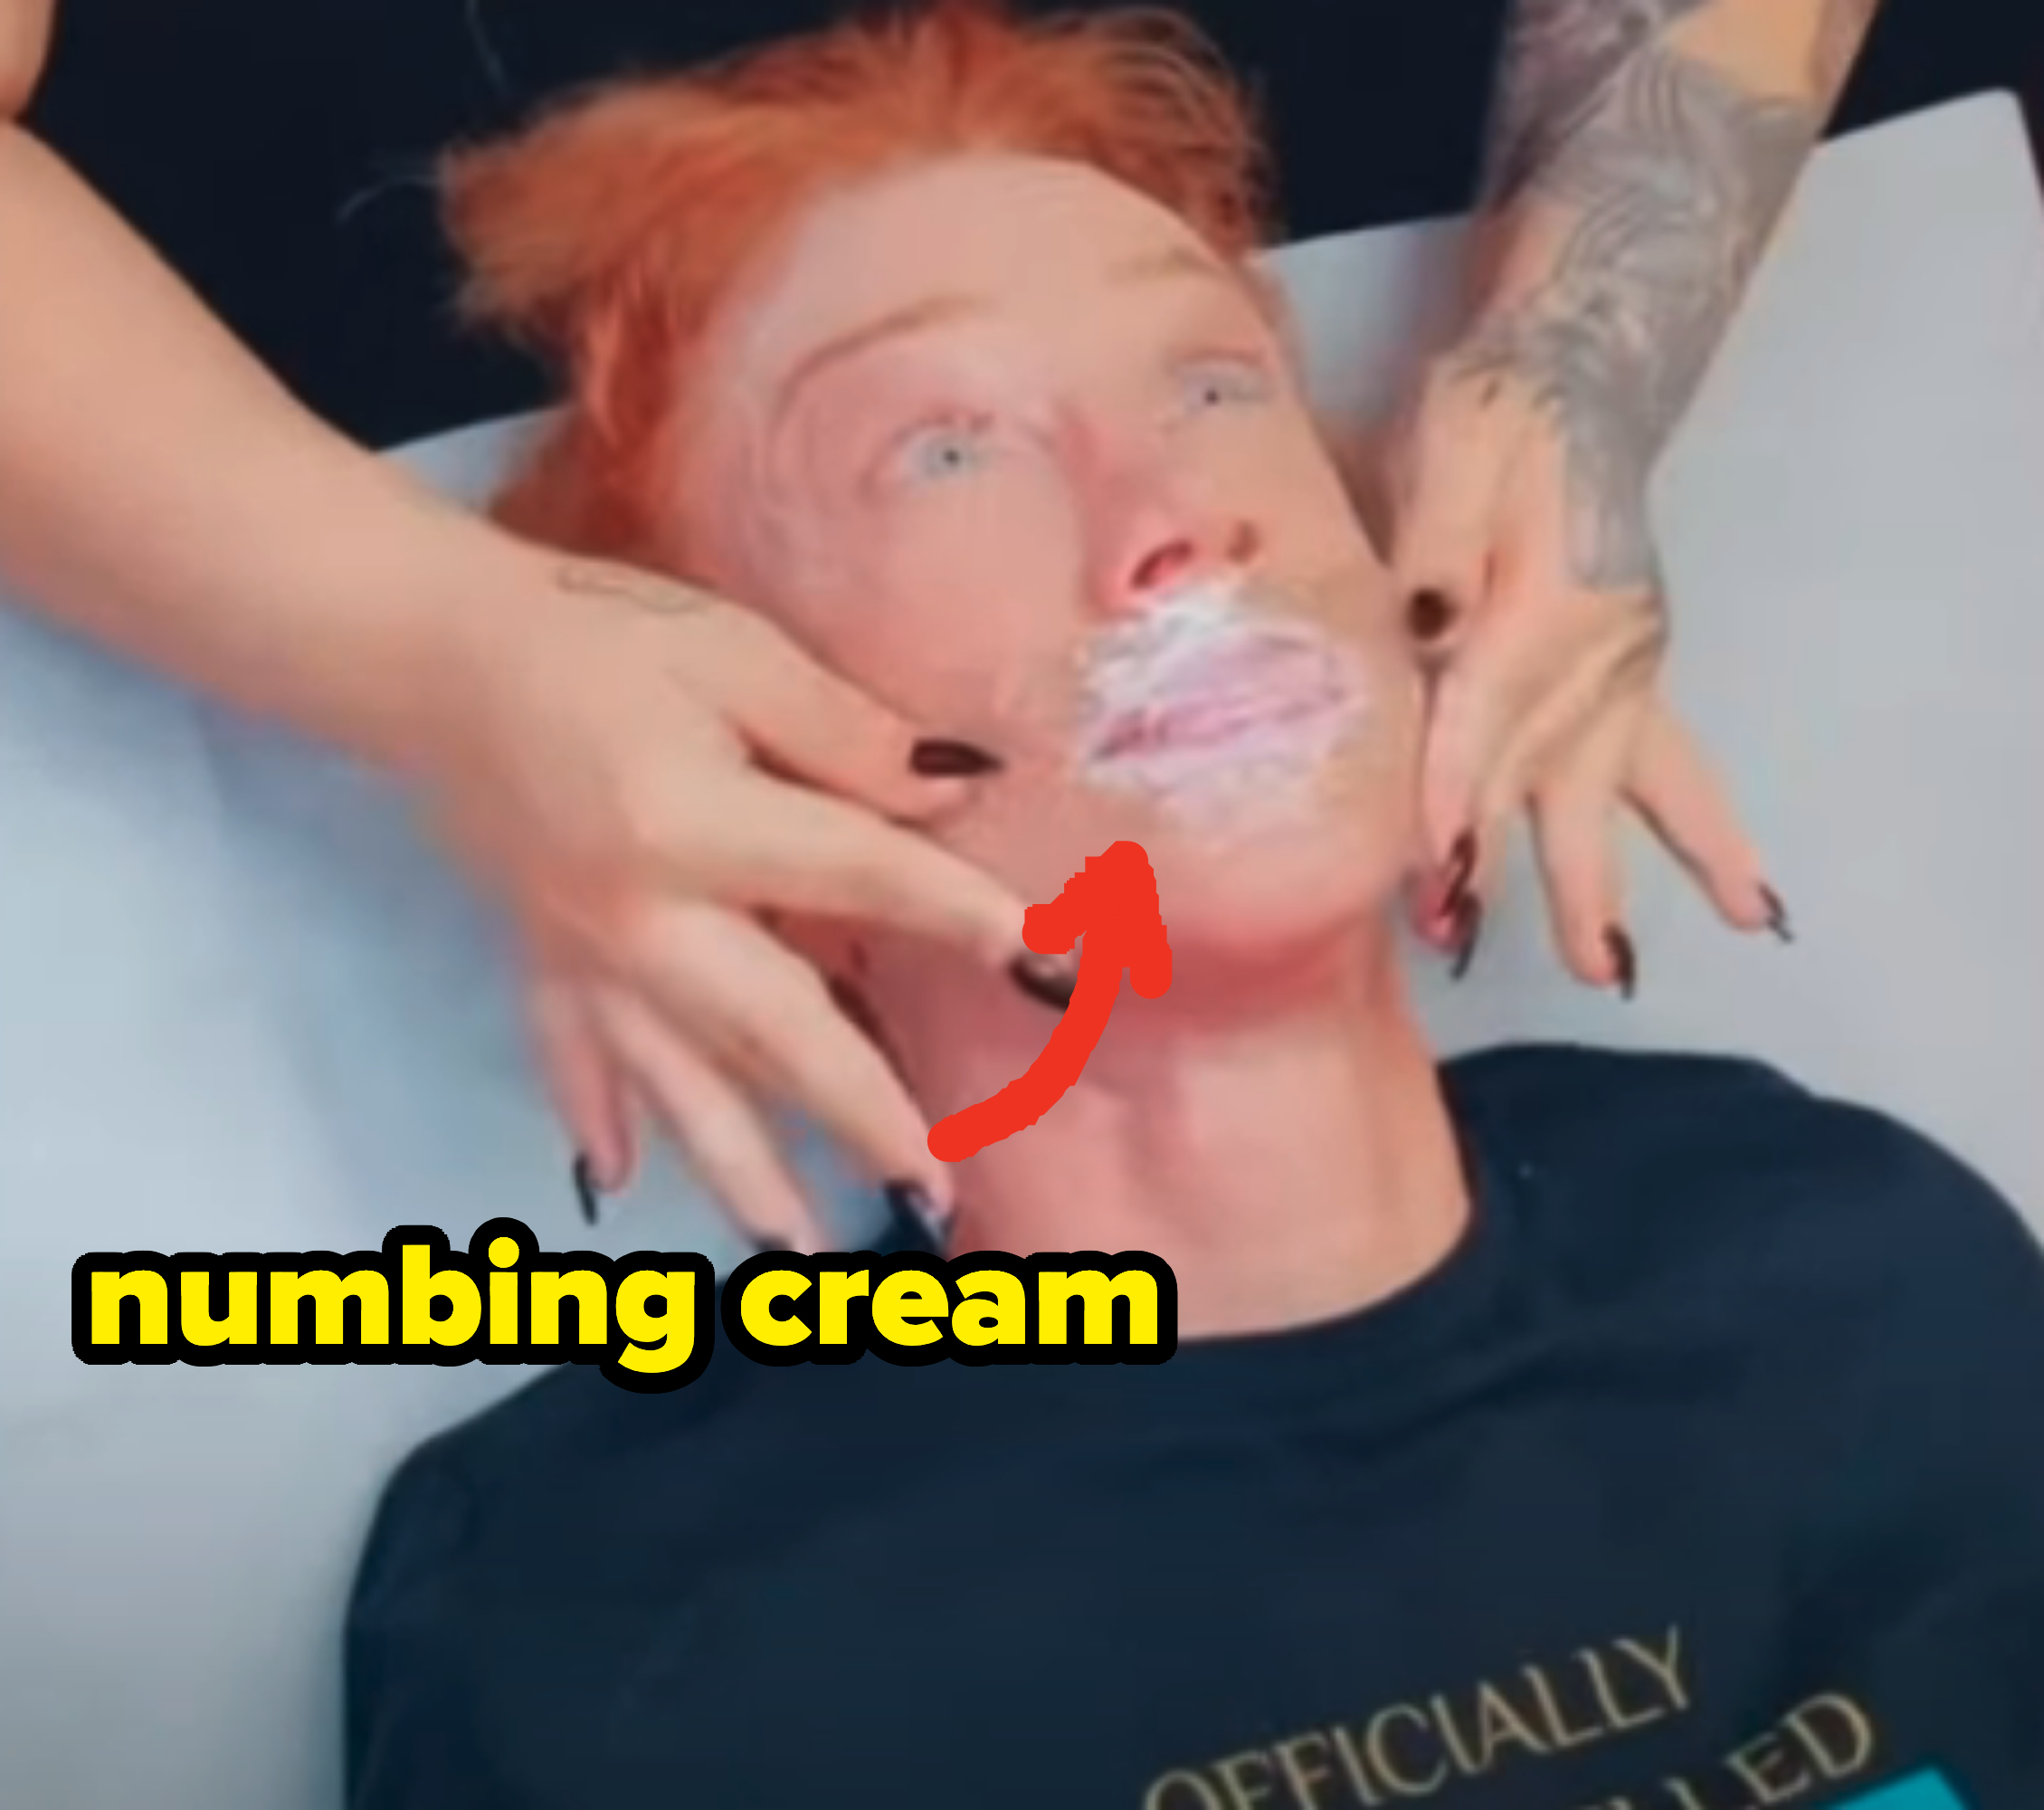 person applying the cream